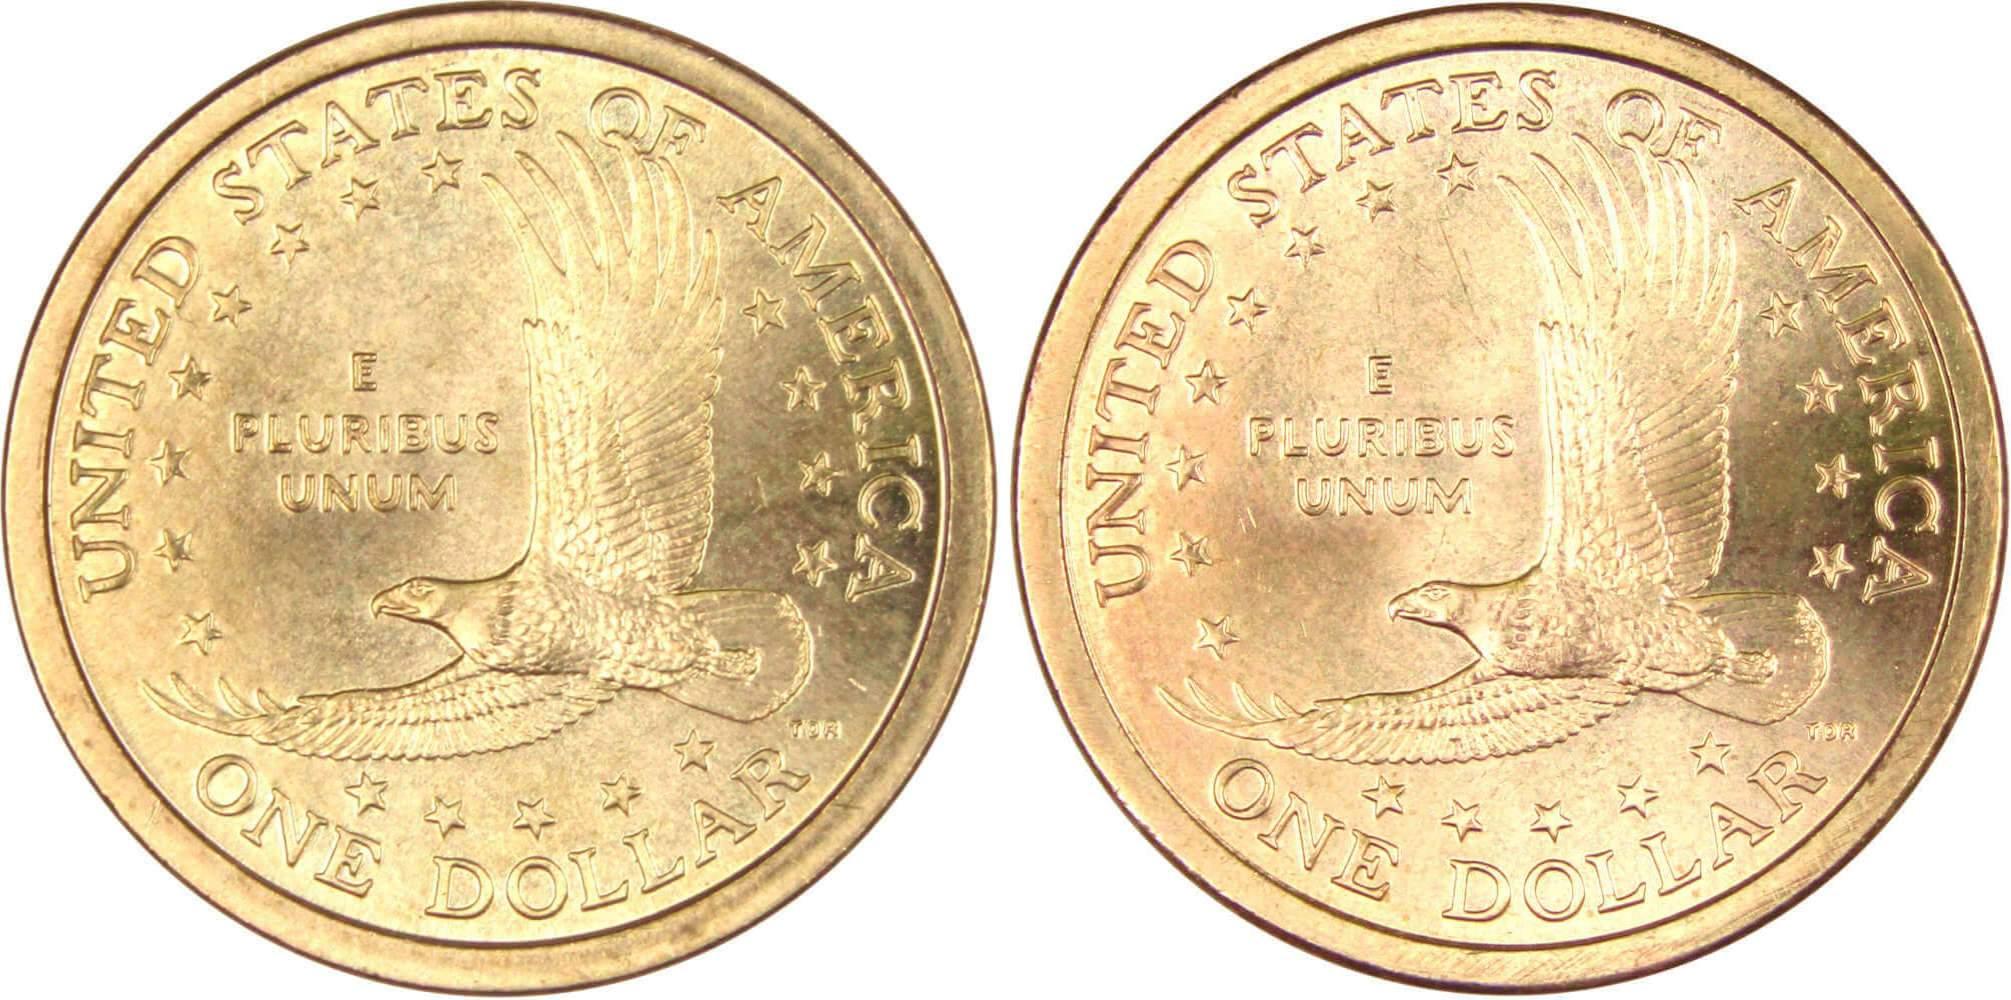 2001 P&D Sacagawea Native American Dollar 2 Coin Set BU Uncirculated $1